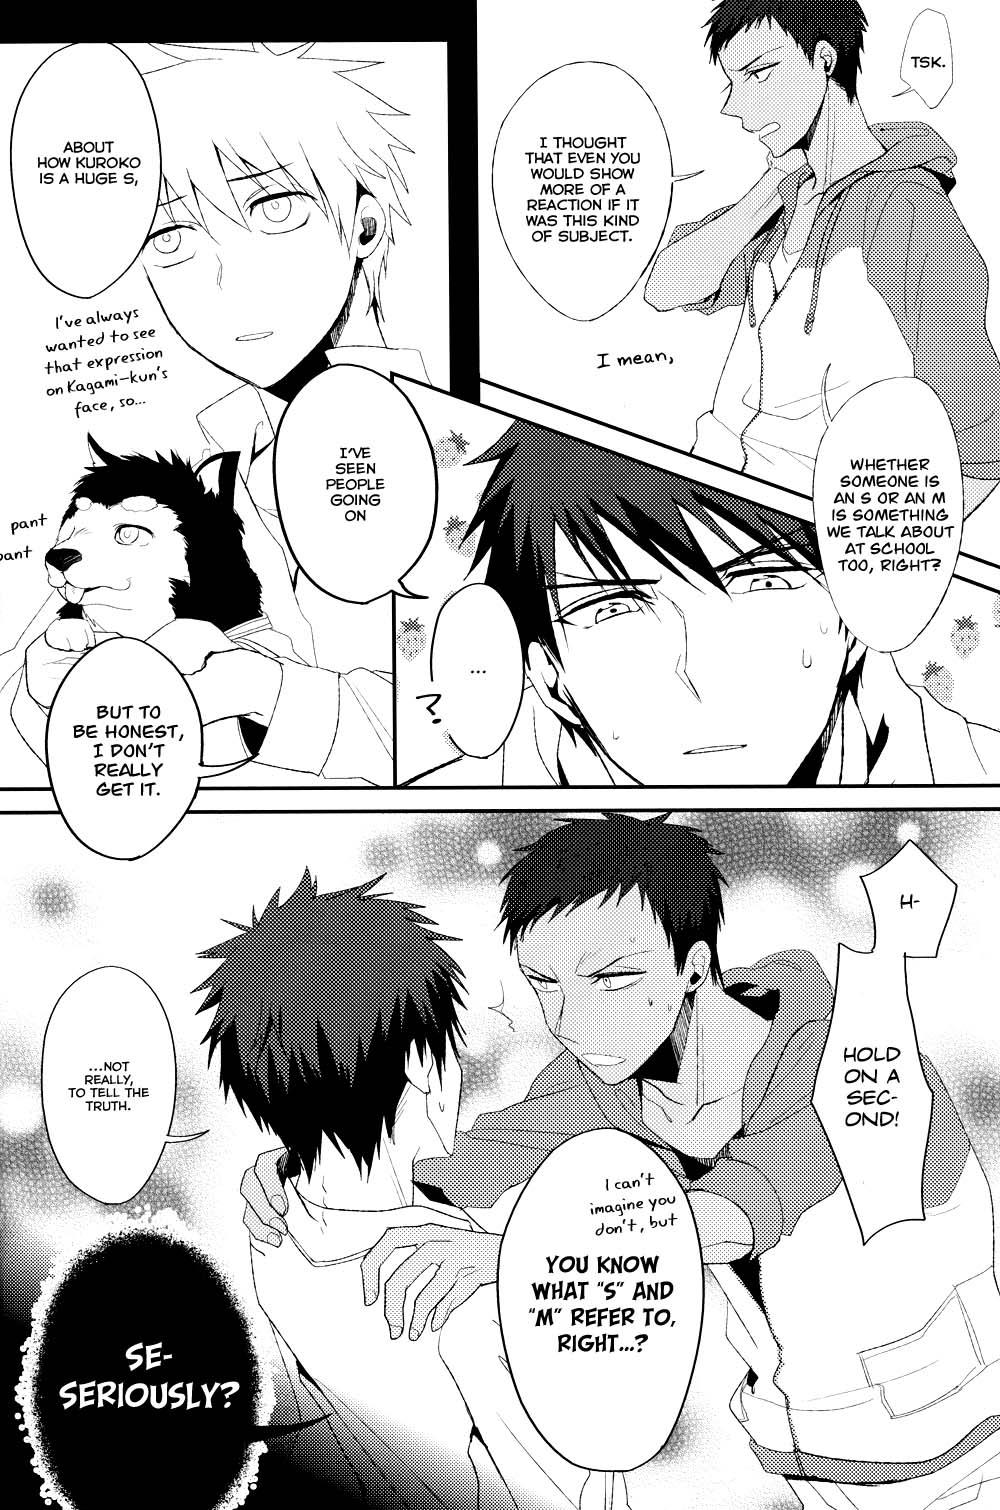 Phat Ass Dont you have an aptitude for this? - Kuroko no basuke Gay Cash - Page 3